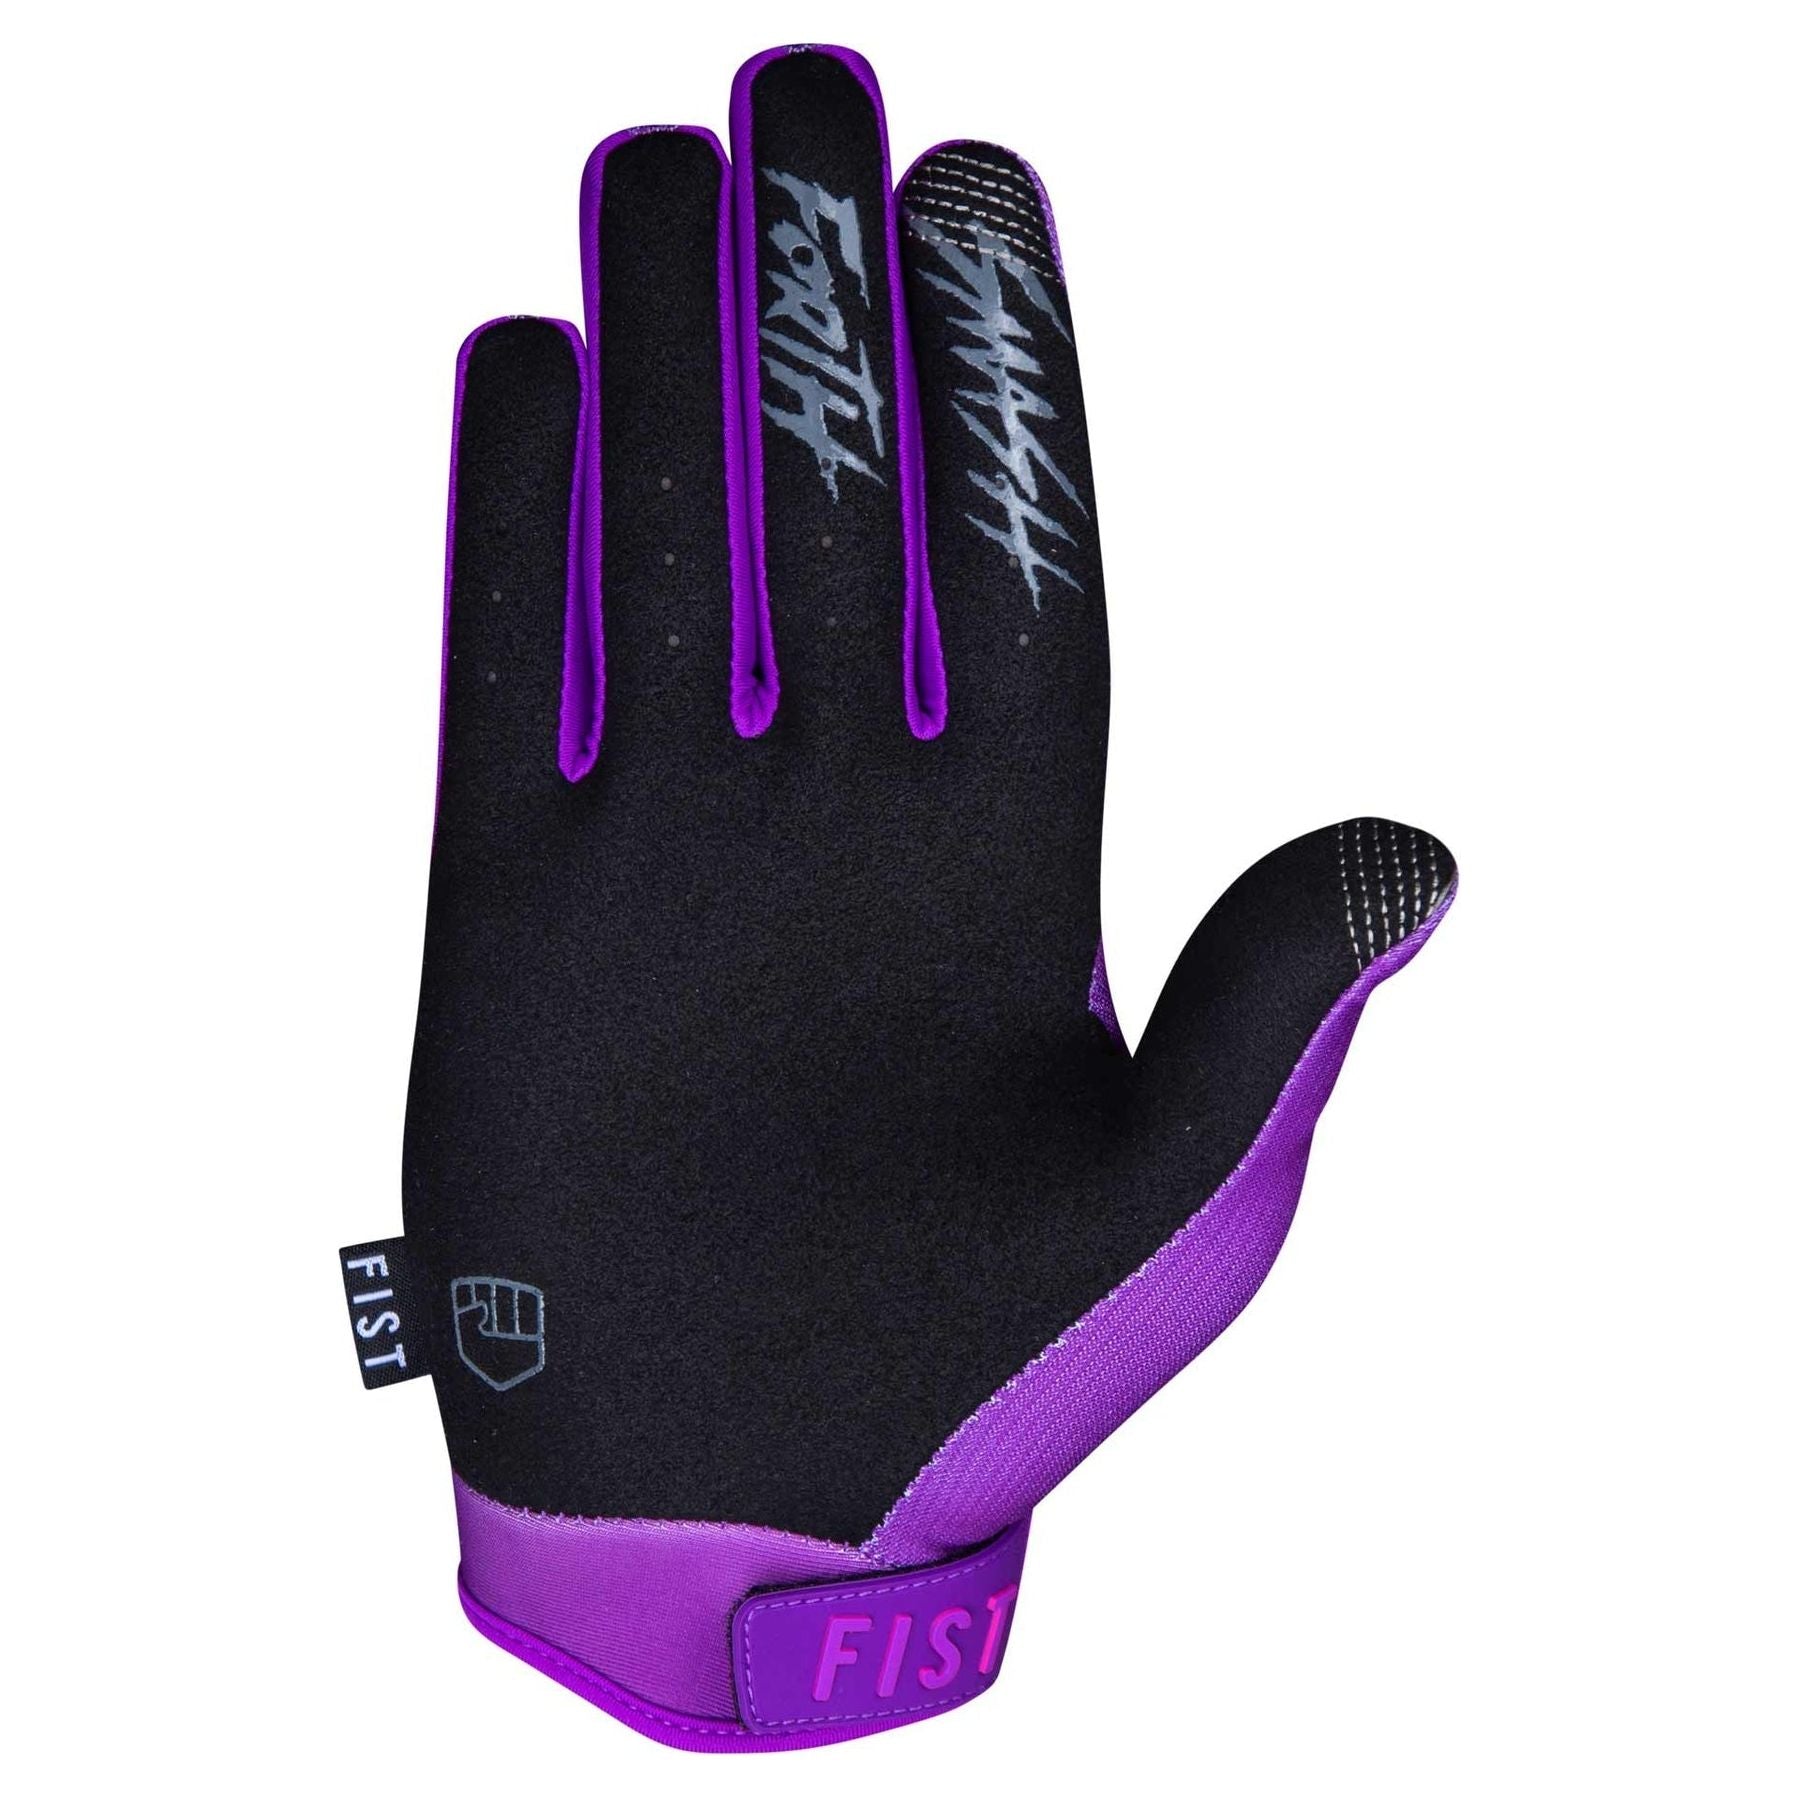 Fist Handwear Stocker Youth Strapped Glove - Youth S - Purple Stocker - Image 2